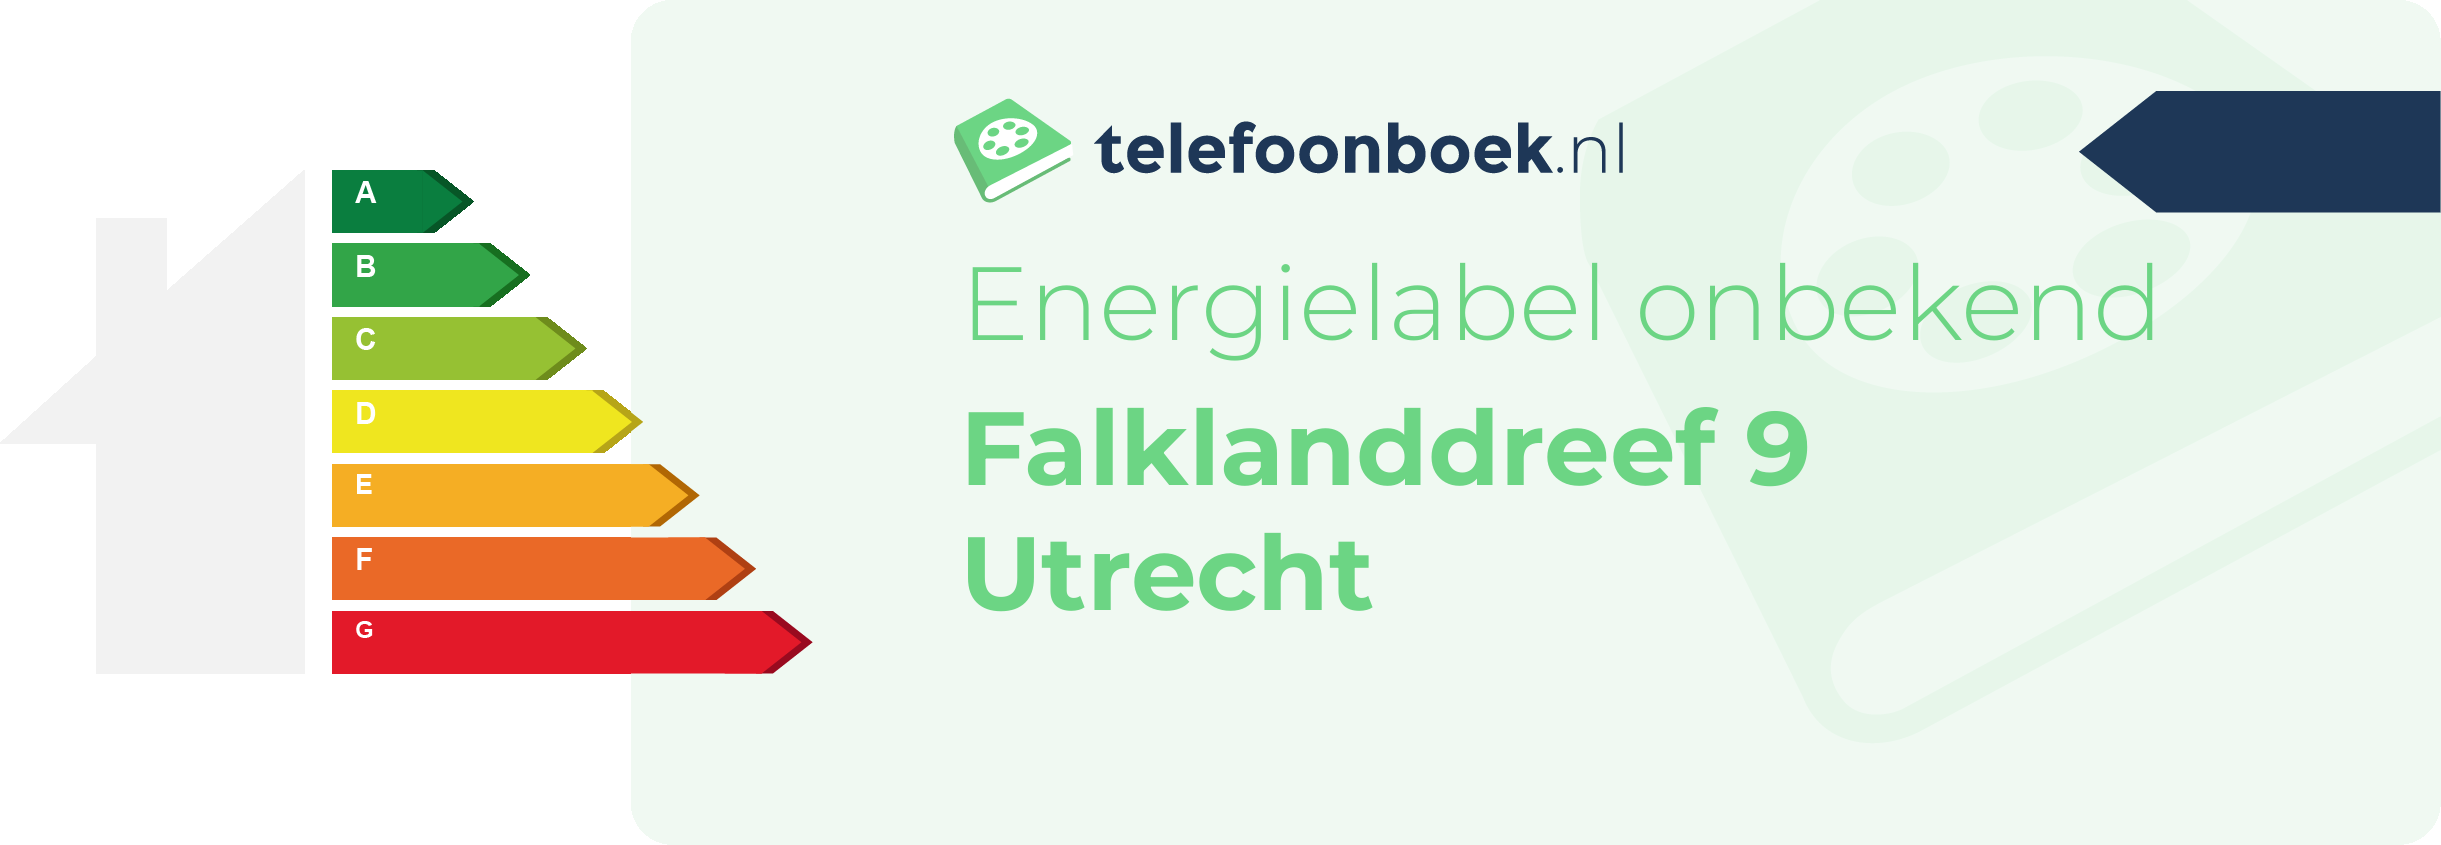 Energielabel Falklanddreef 9 Utrecht